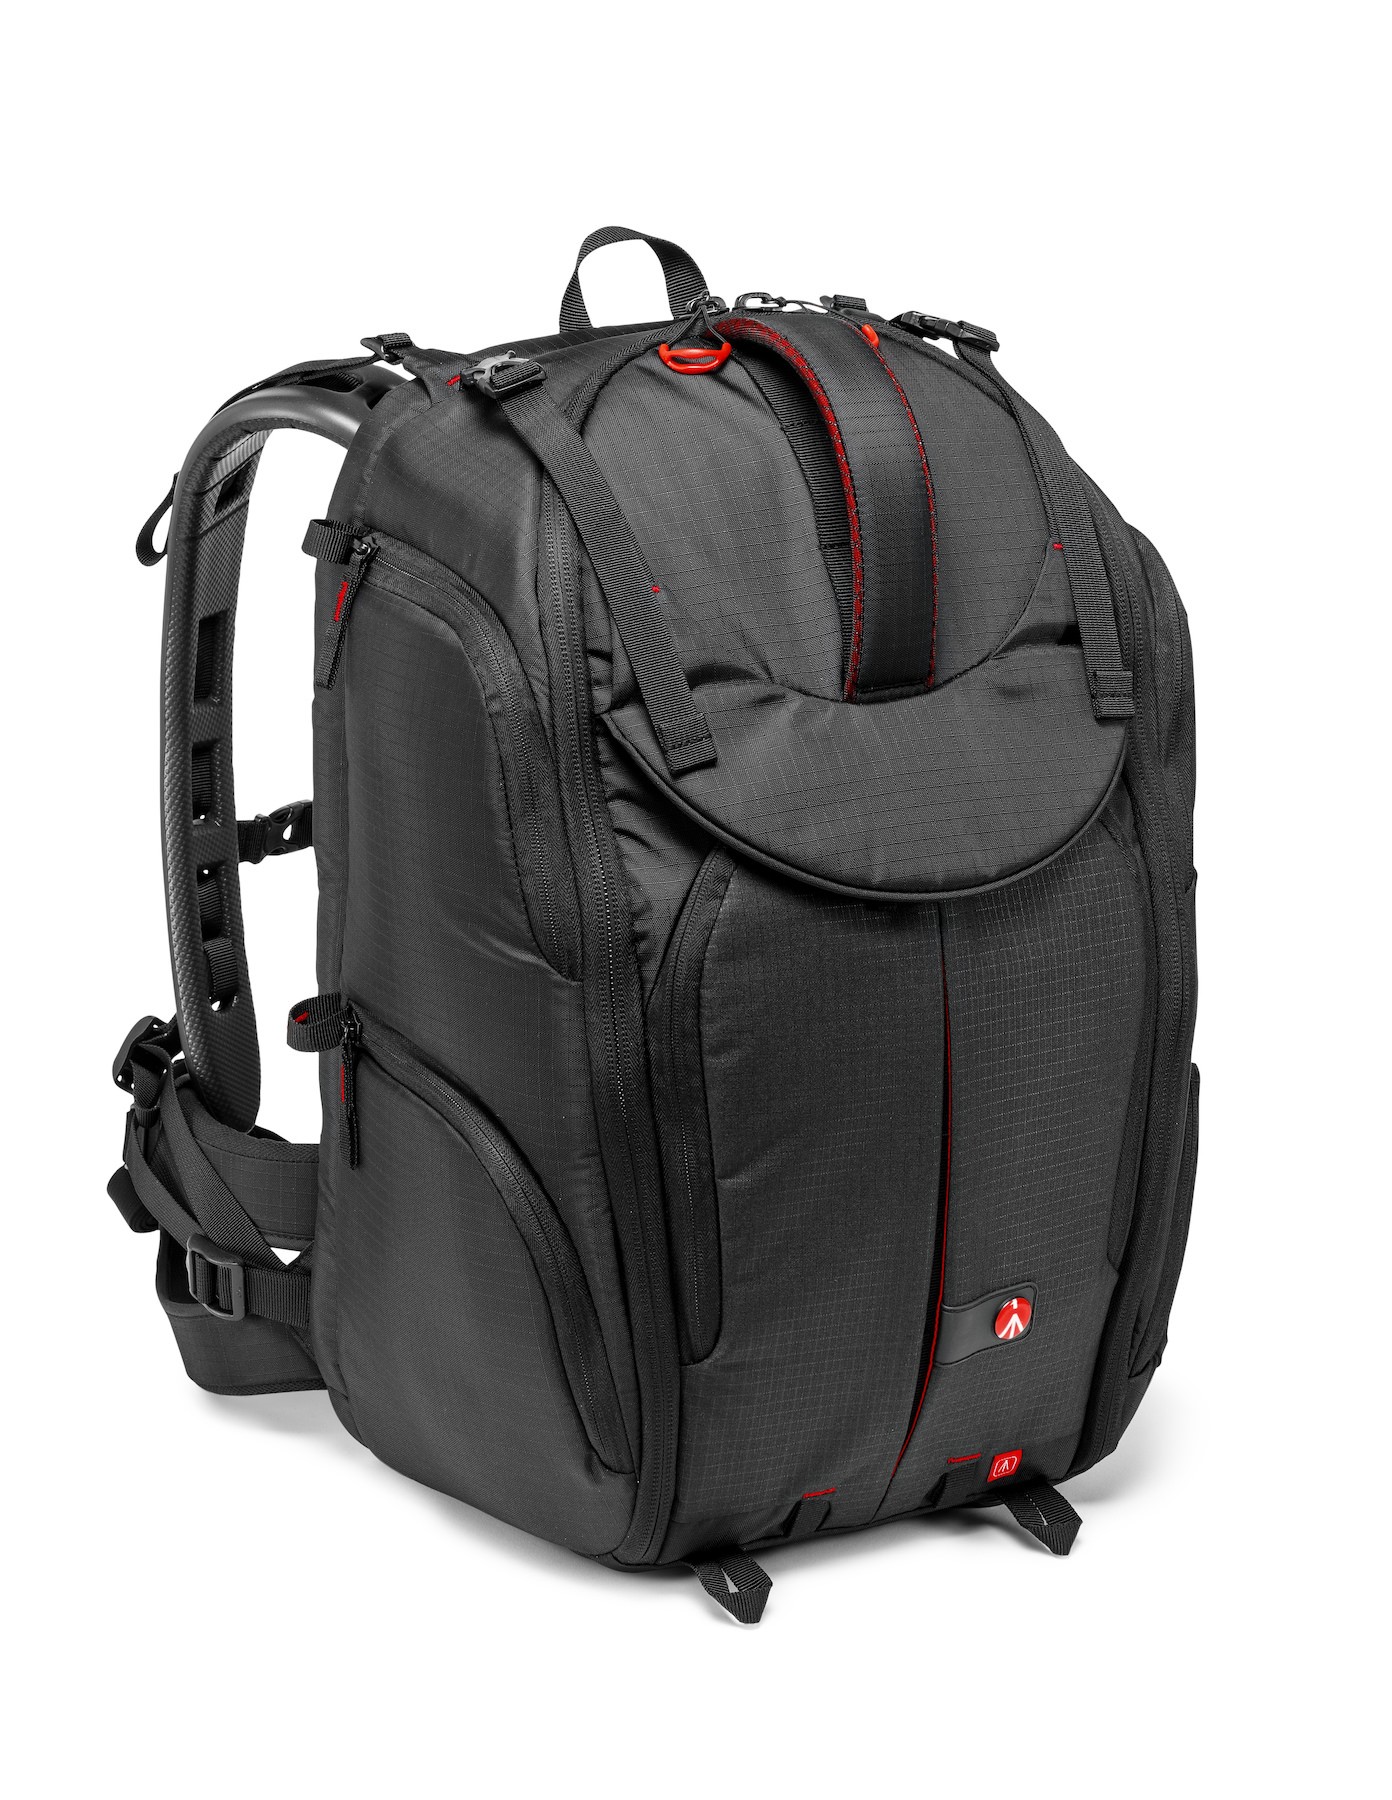 Pro Light camera backpack PV-4